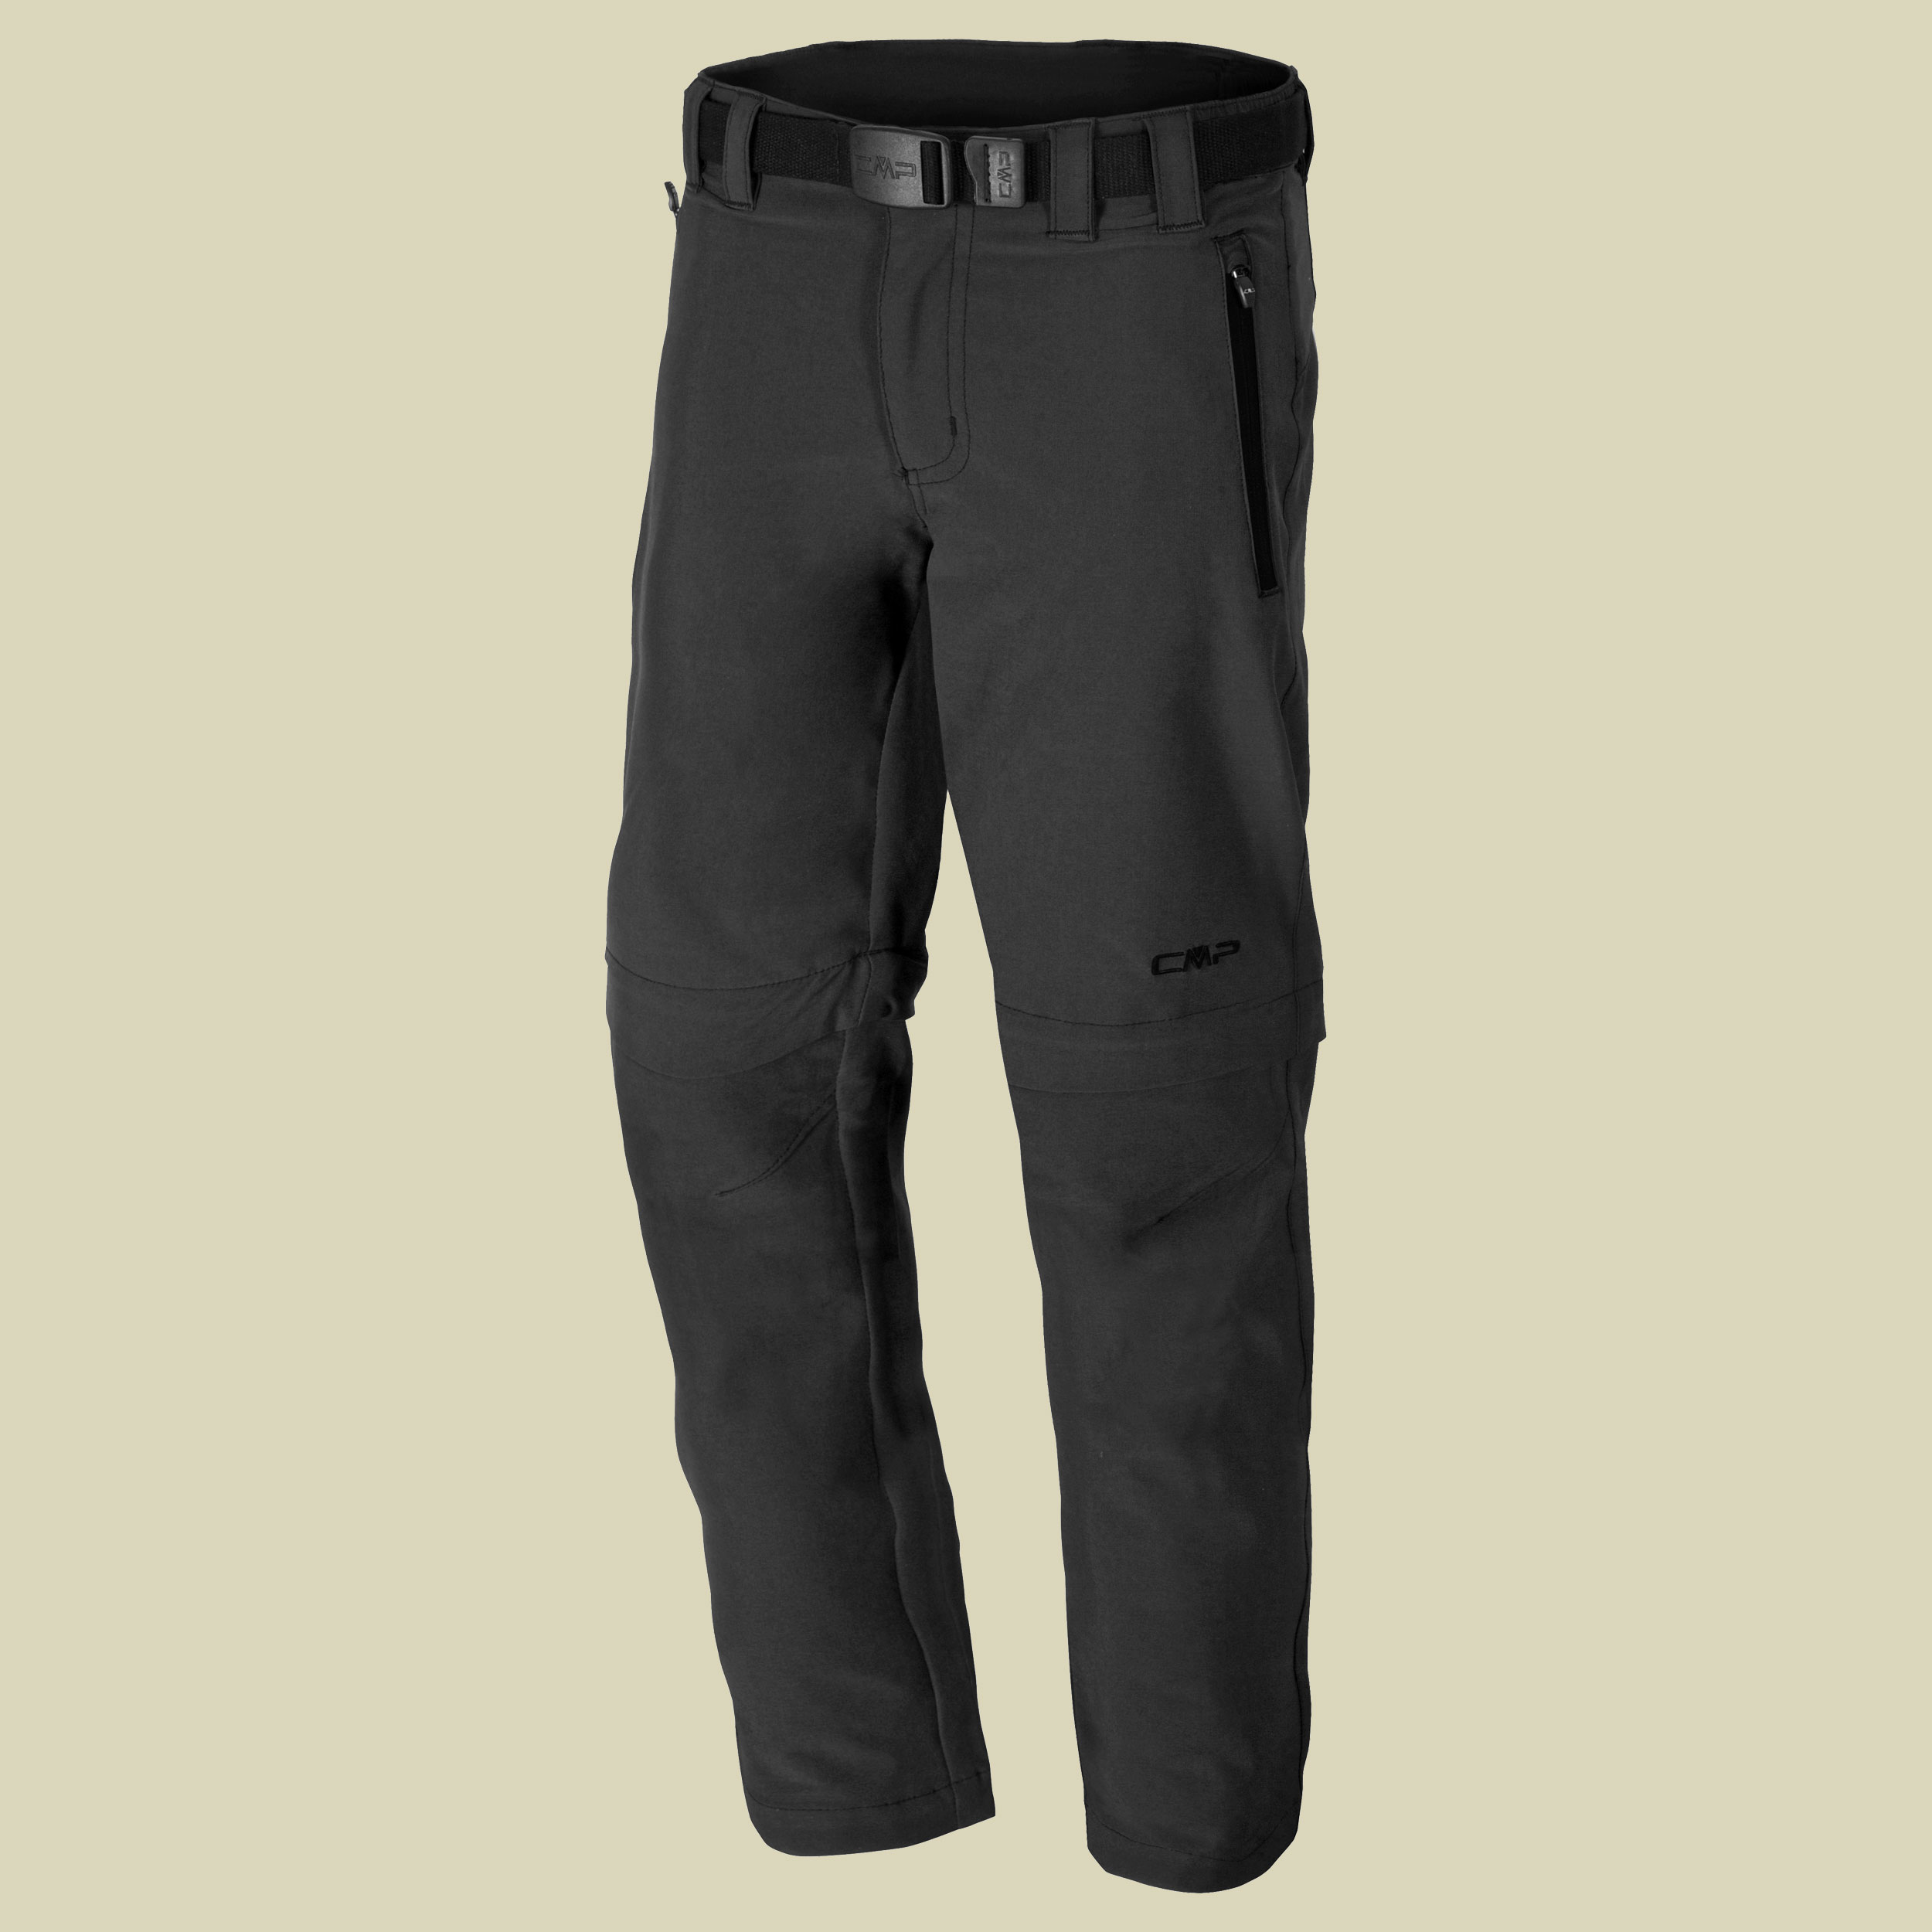 Man Long Pant Zip Off Stretch 3T51647 Größe 56 Farbe U423 antracite-nero